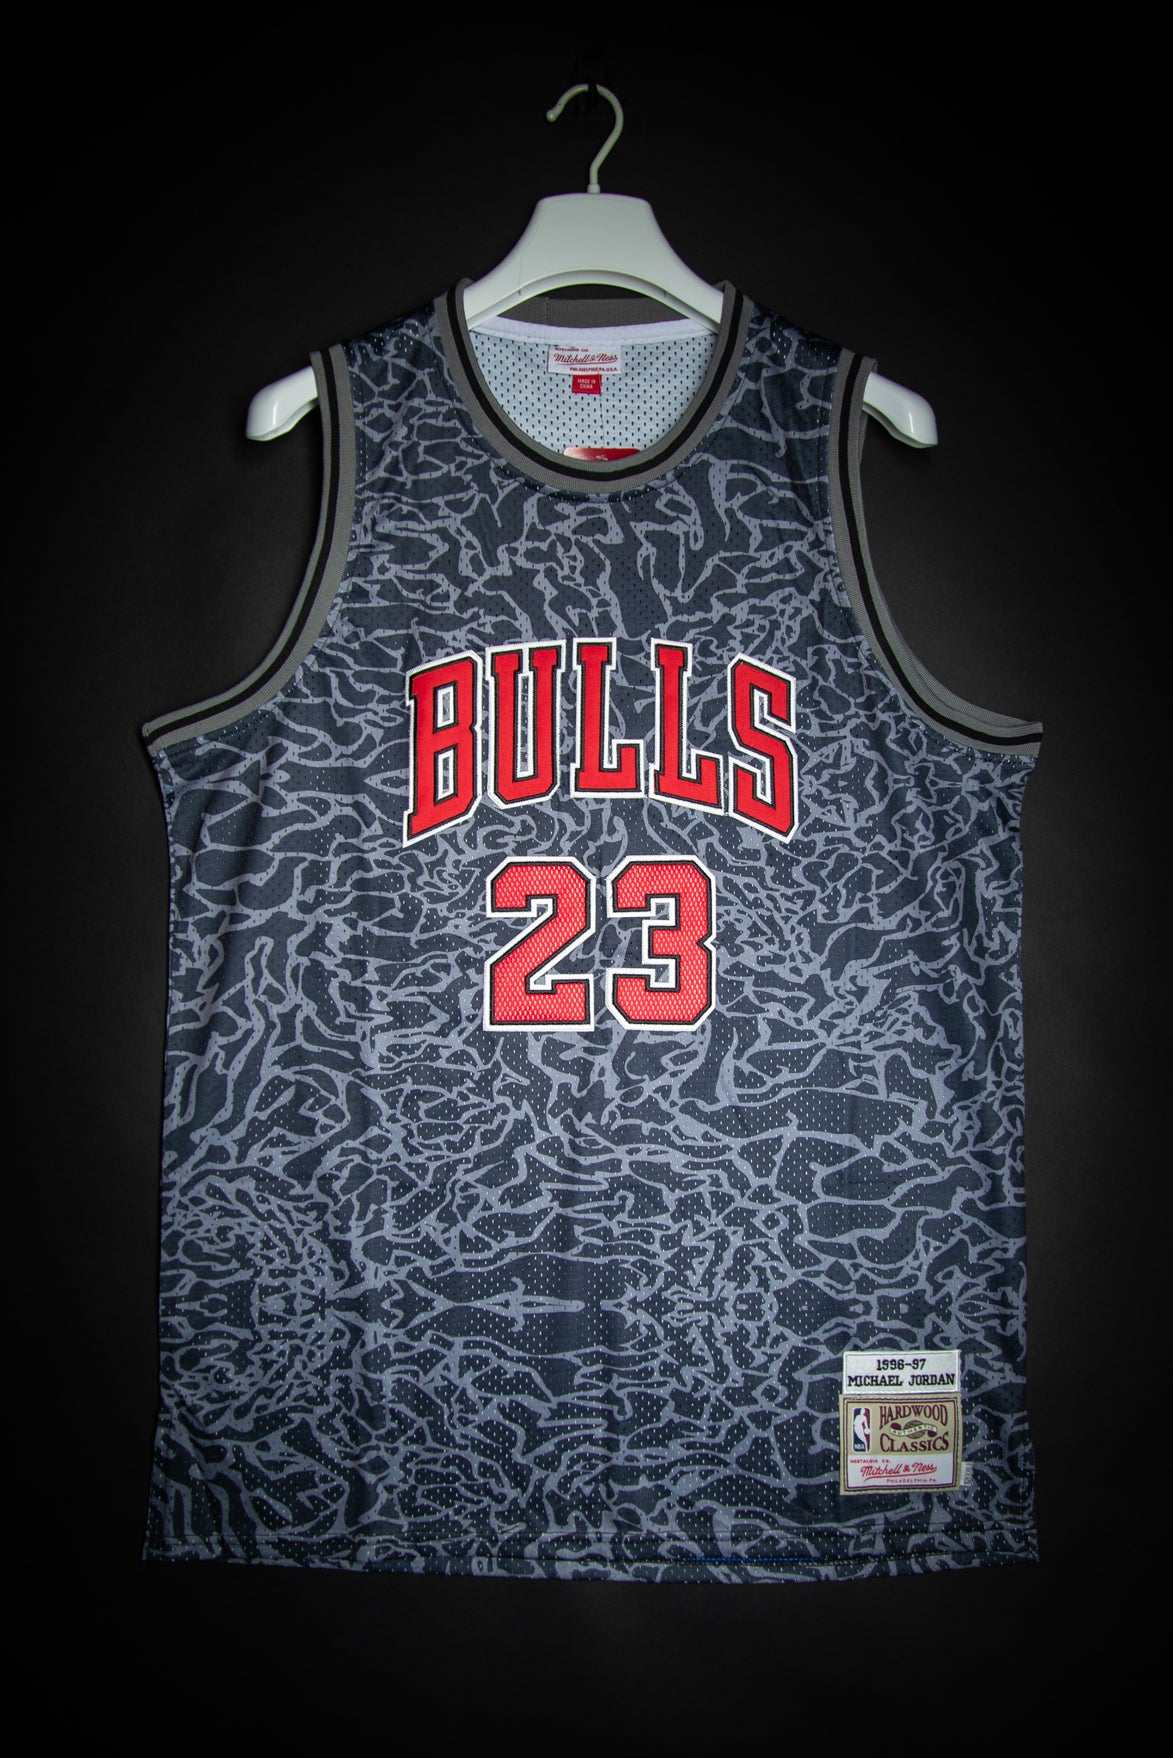 Bulls uniforms will carry Michael Jordan's Jumpman logo - Chicago